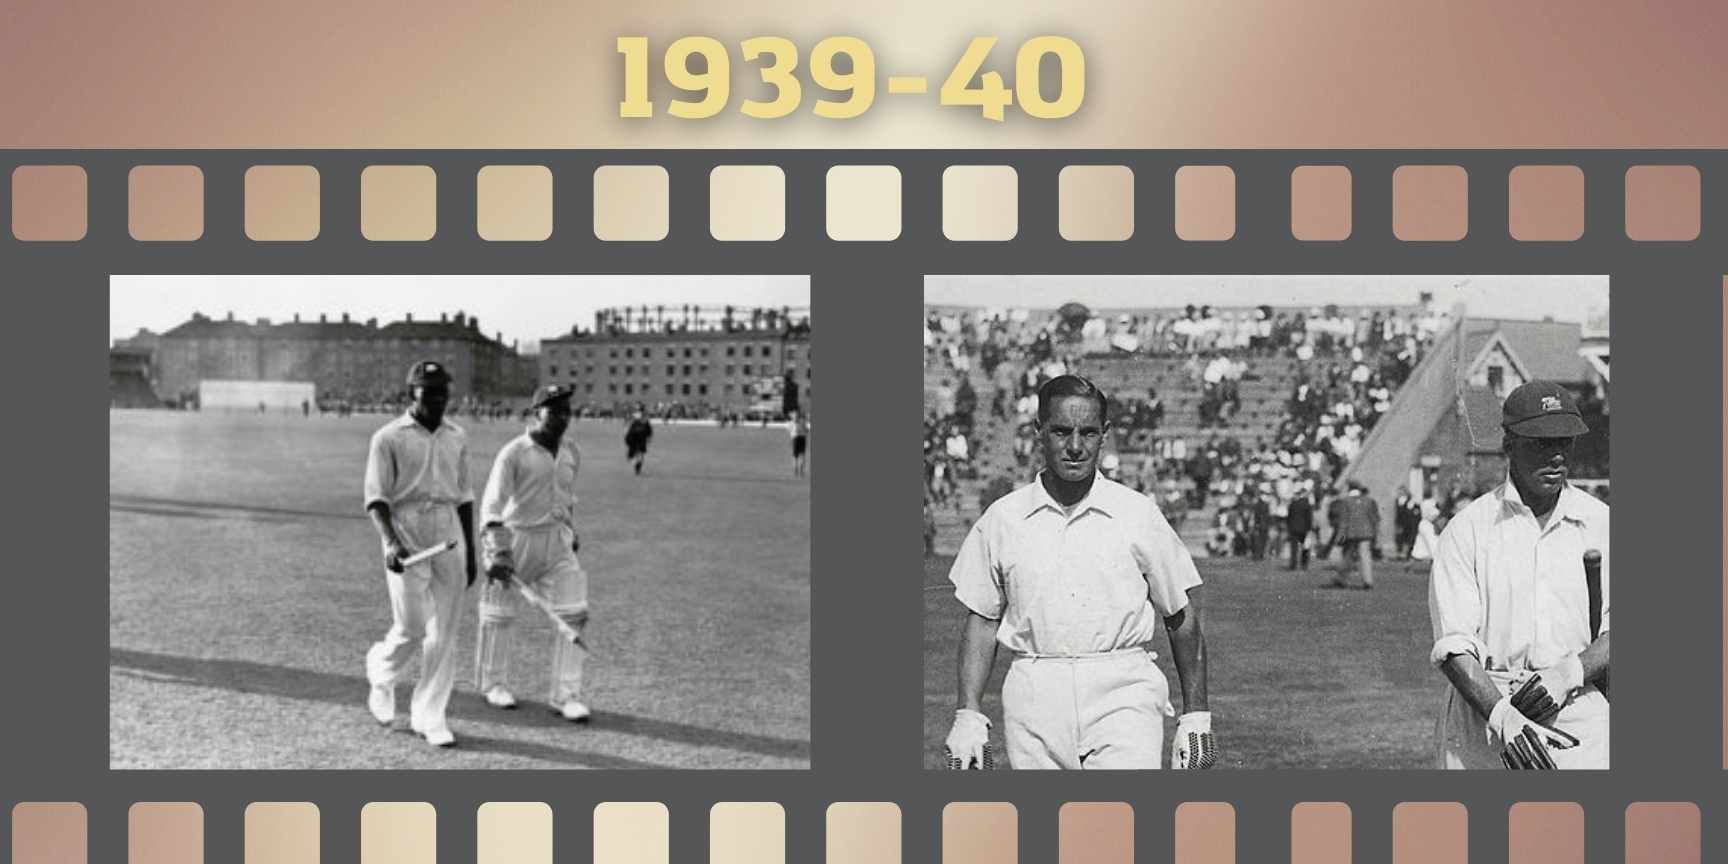 popularity of cricket in 1939-40